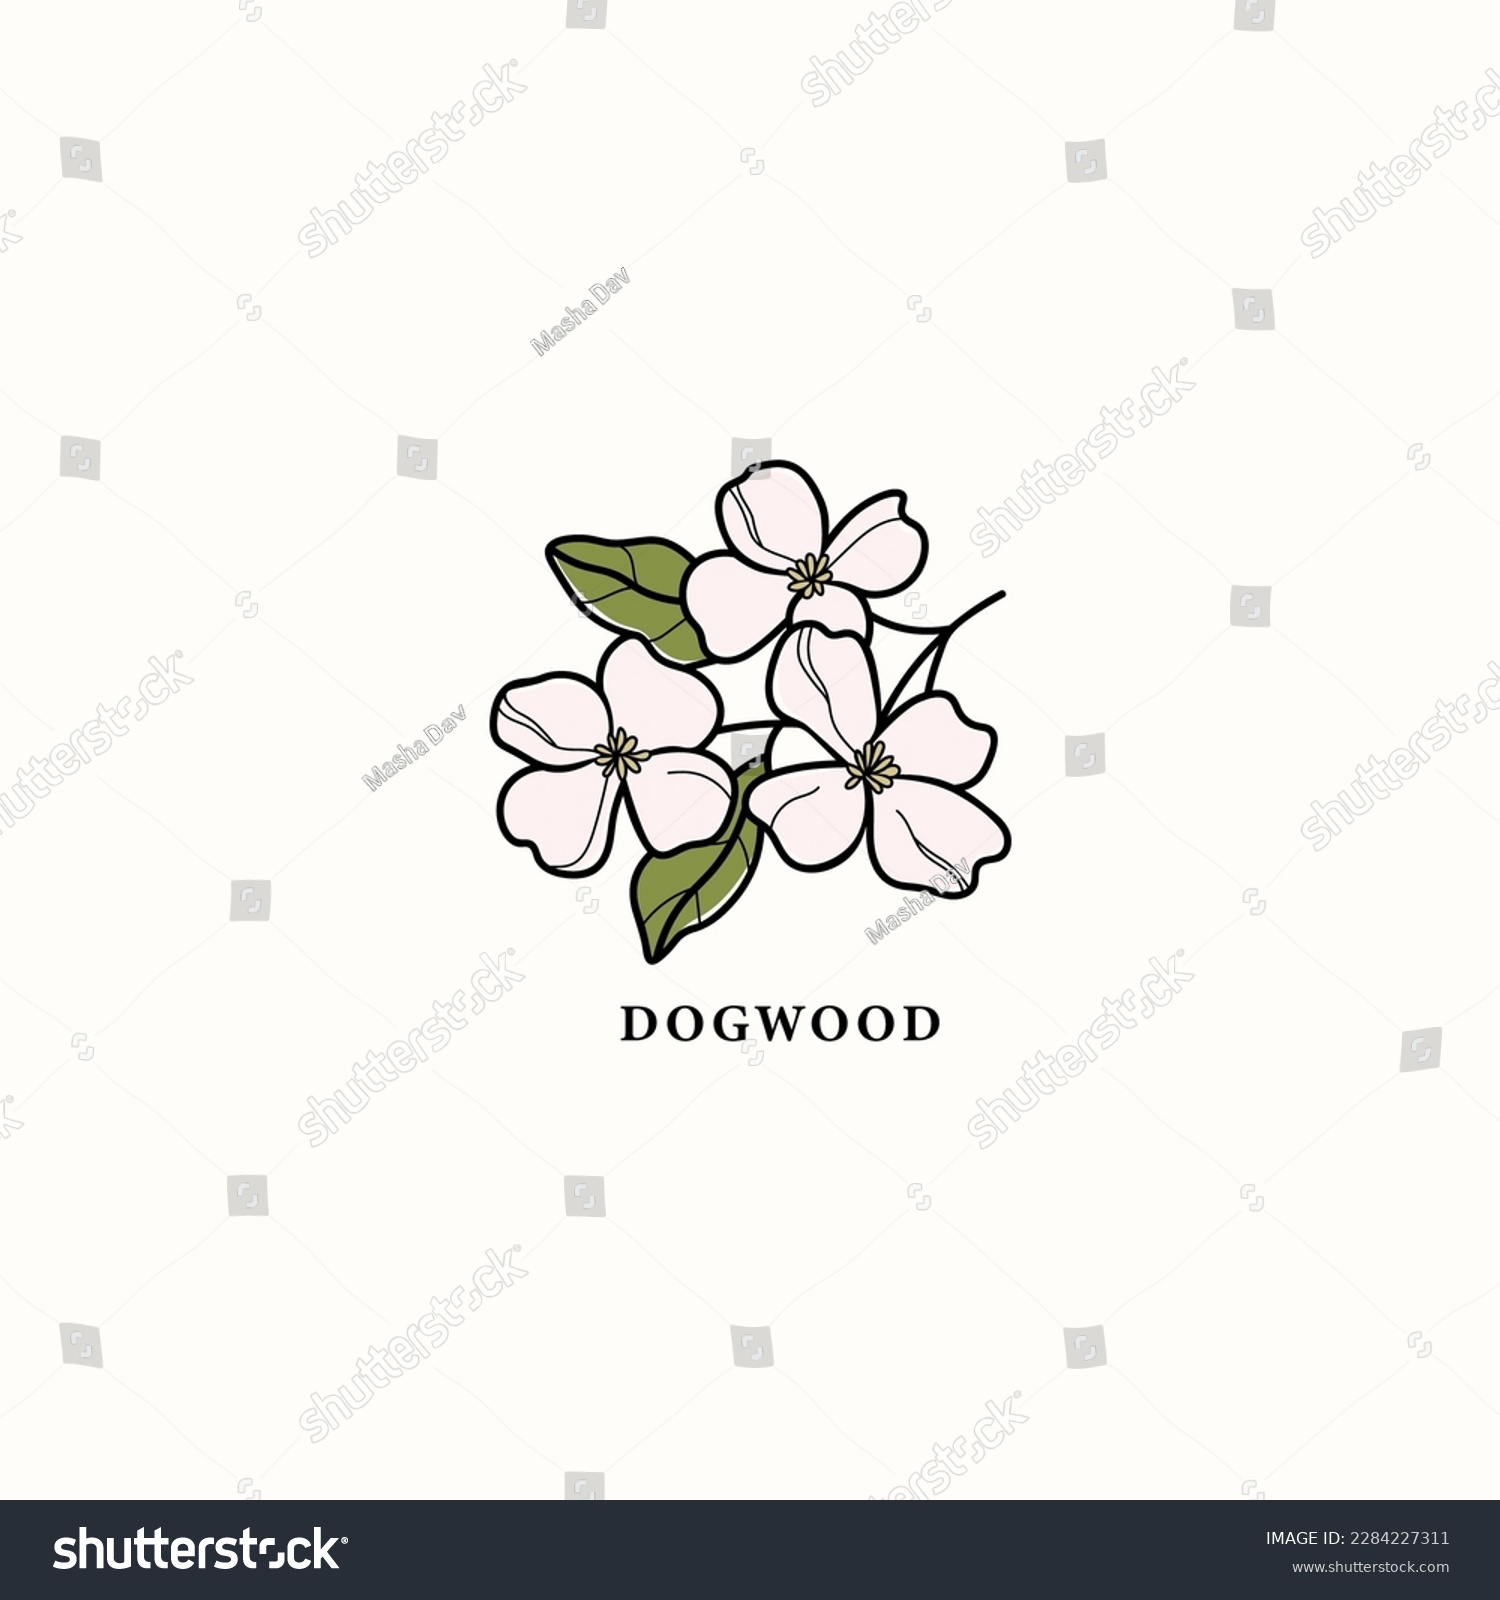 SVG of Line art dogwood branch drawing svg